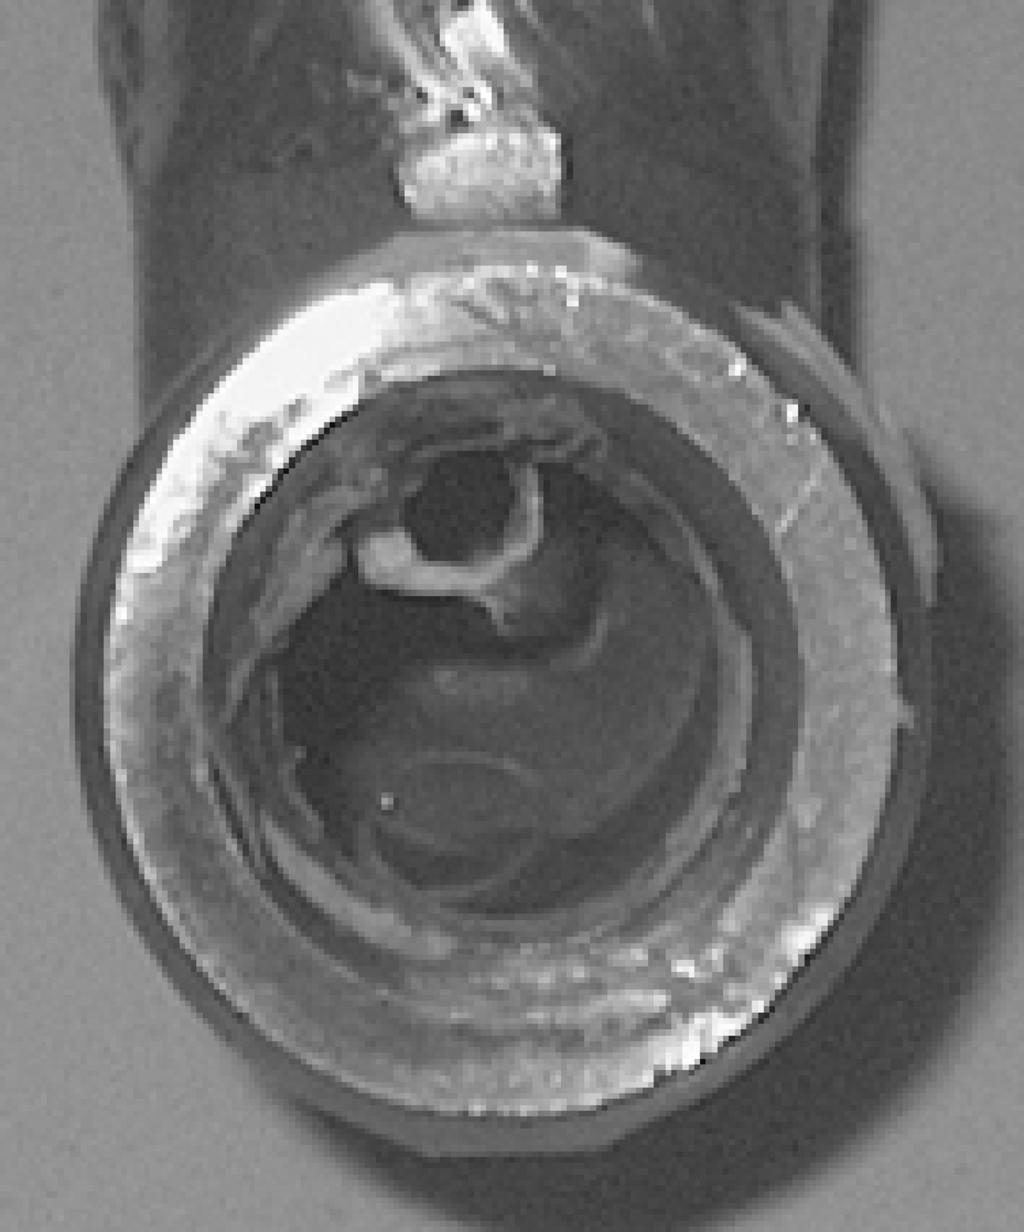 BINDER ET AL., doi:10.1520/jai102262 127 FIG. 2 Residue of sealing tape on valve connector.